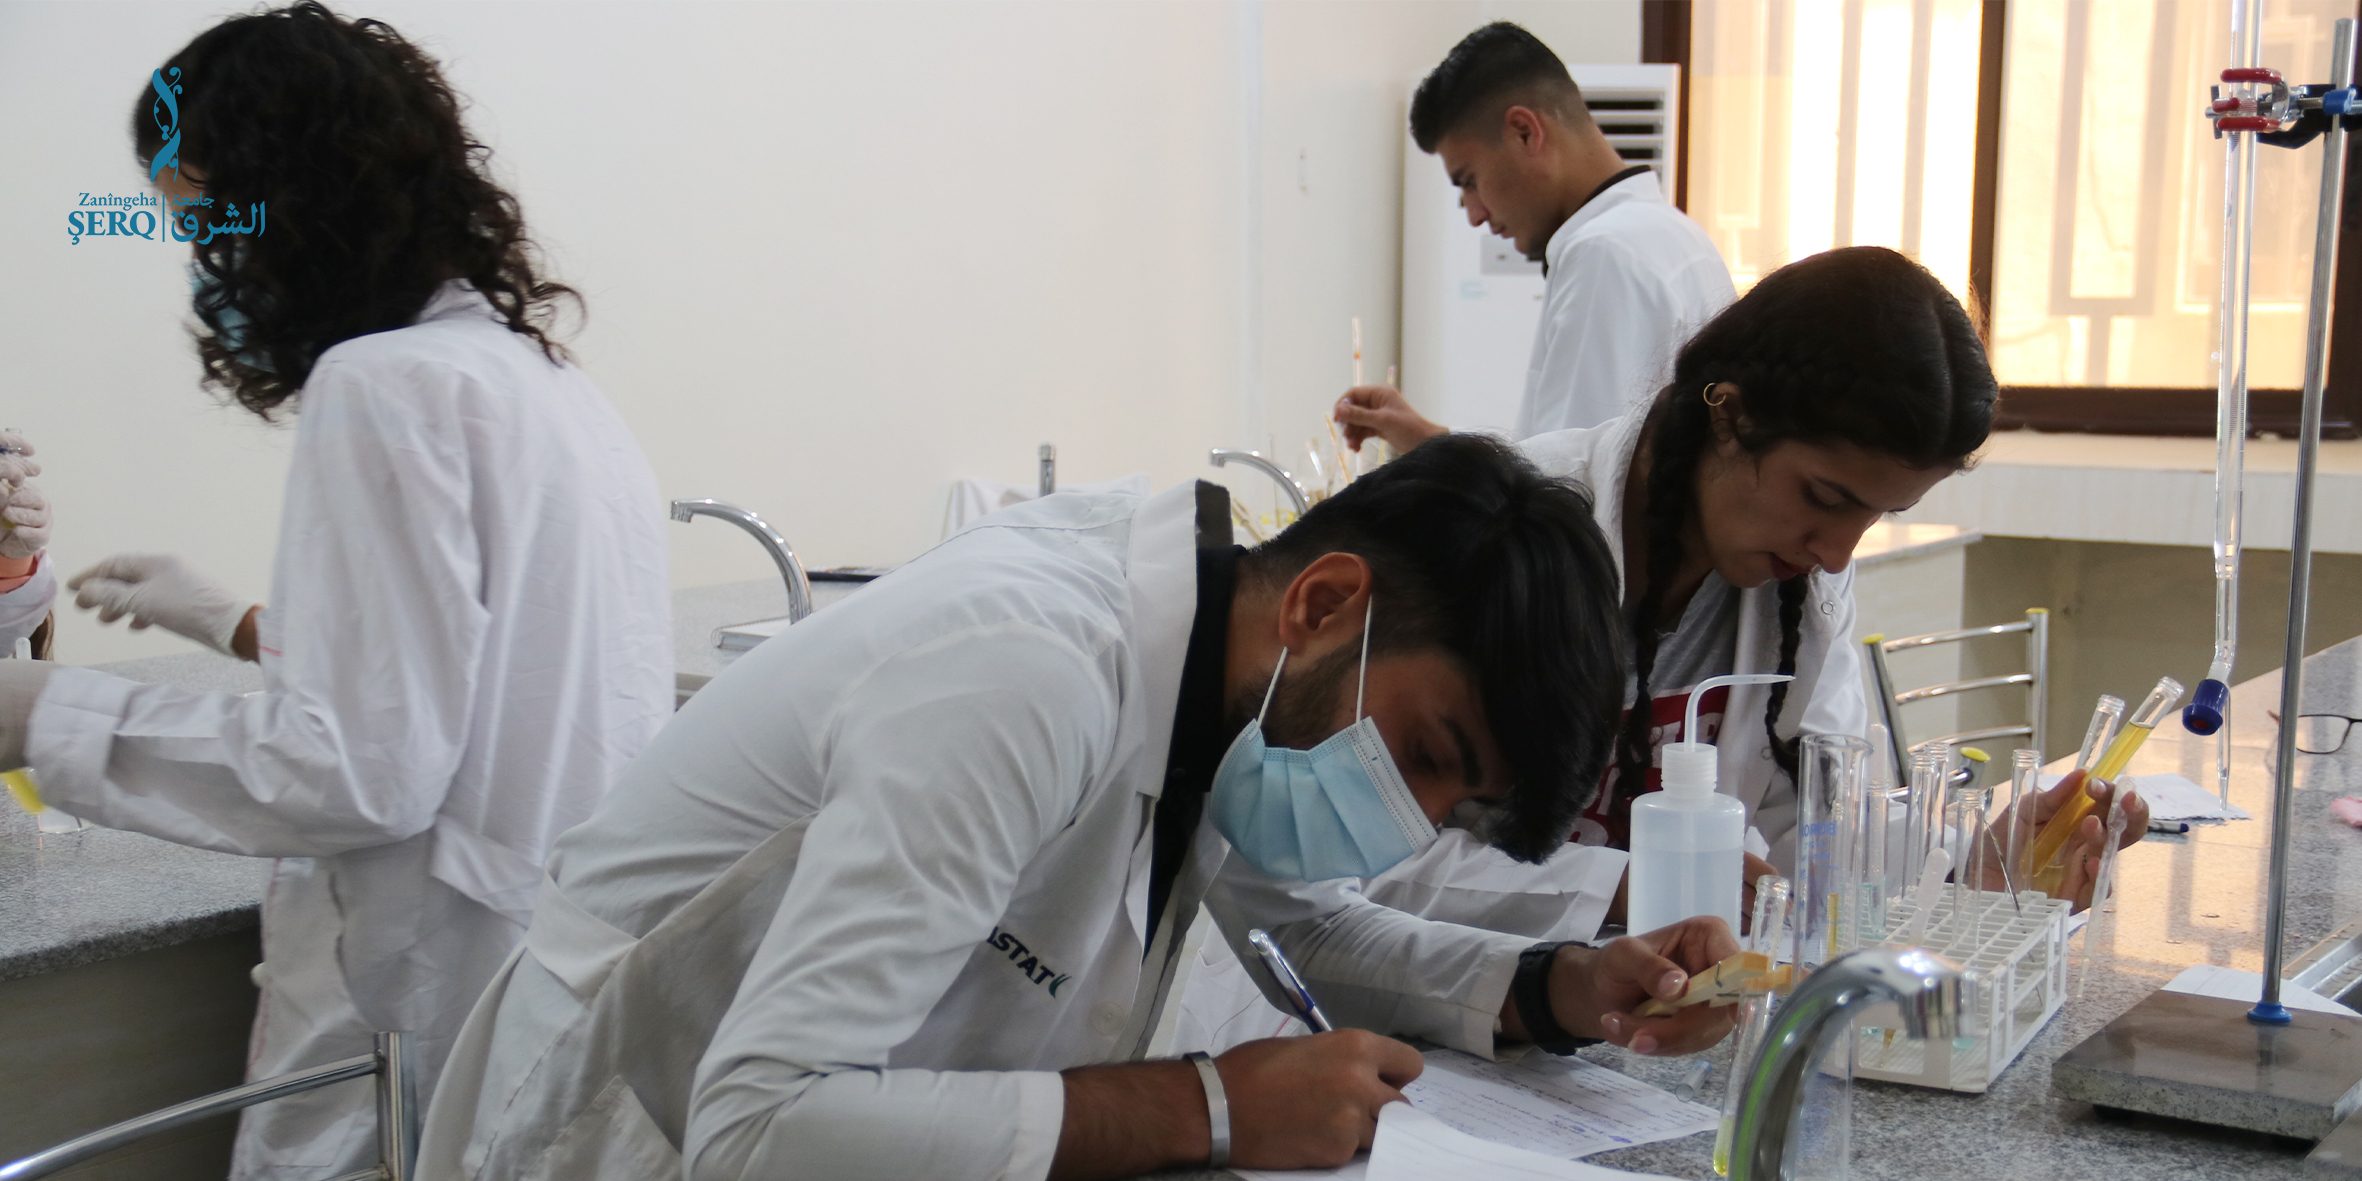 Practical exam at Al-Sharq University